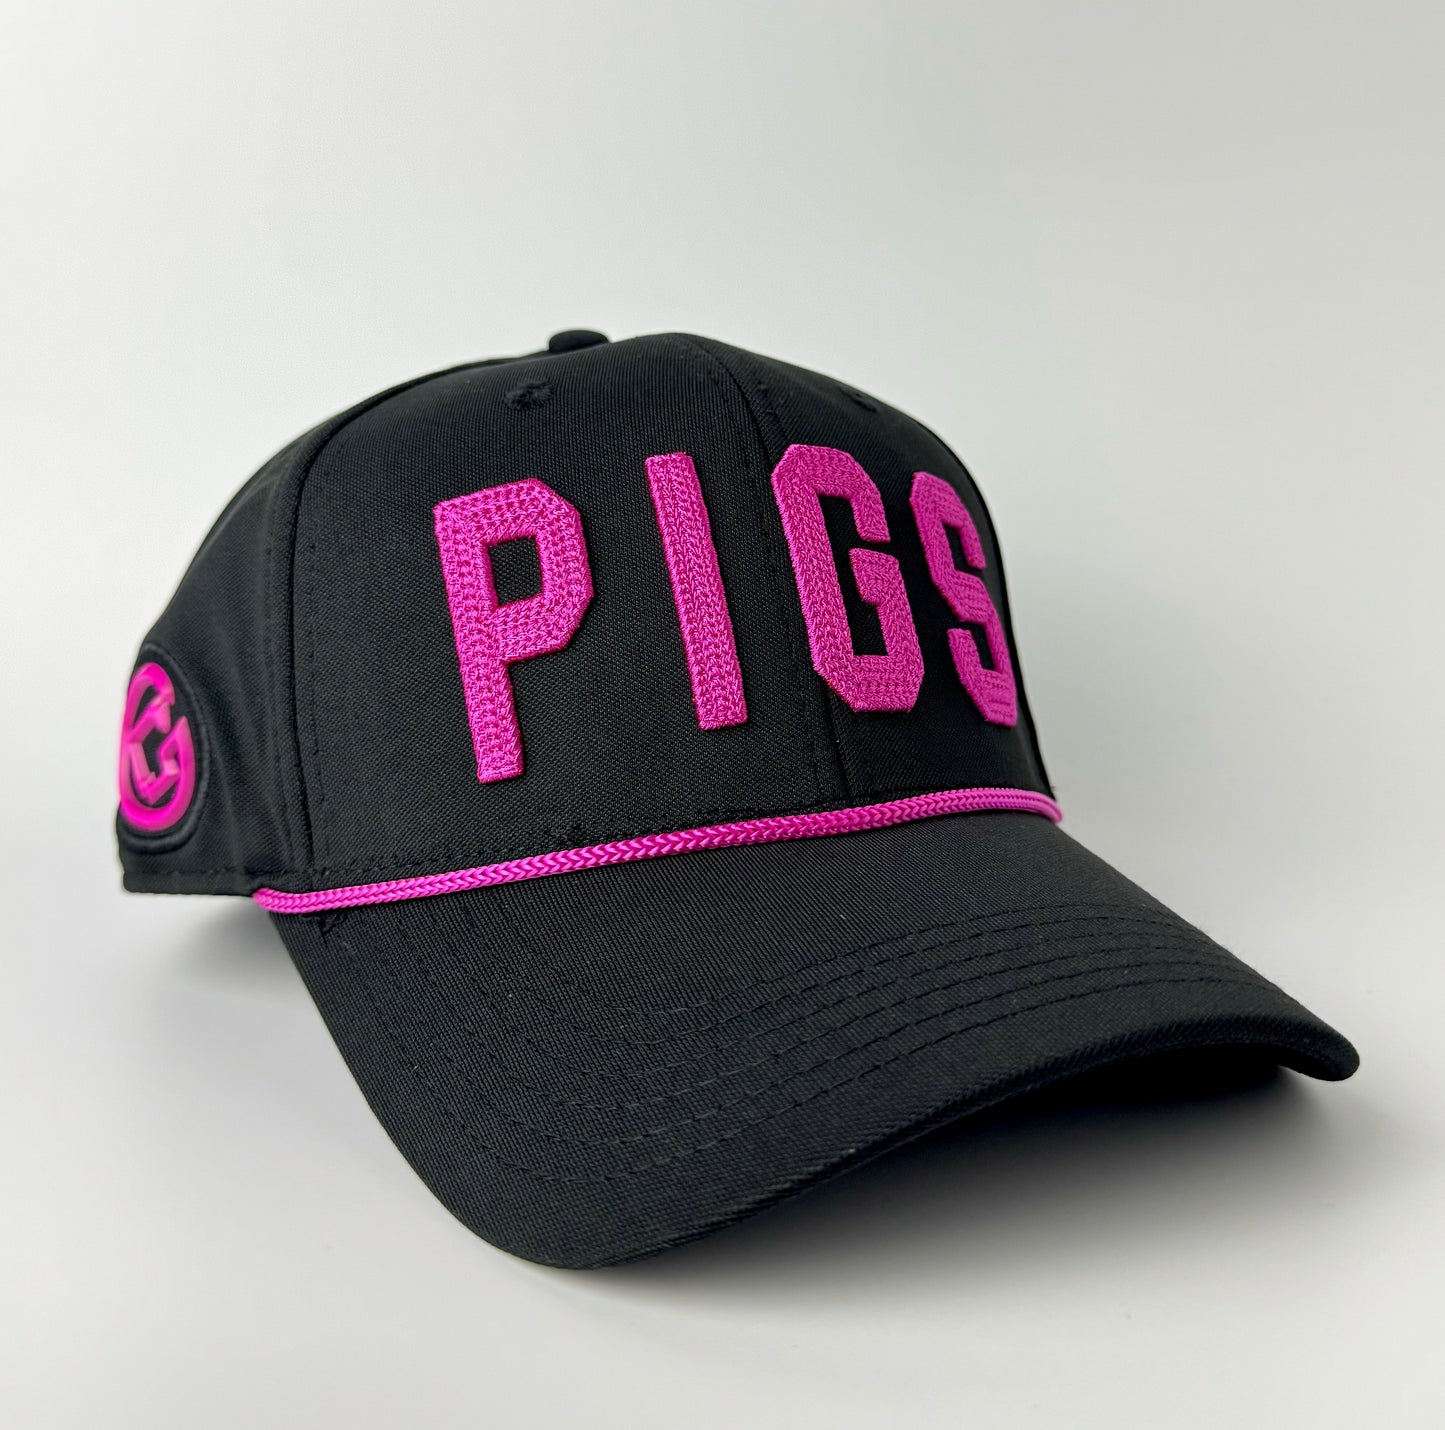 "OG" PIGS -Black with Bubblegum - Snapback - Curved Bill